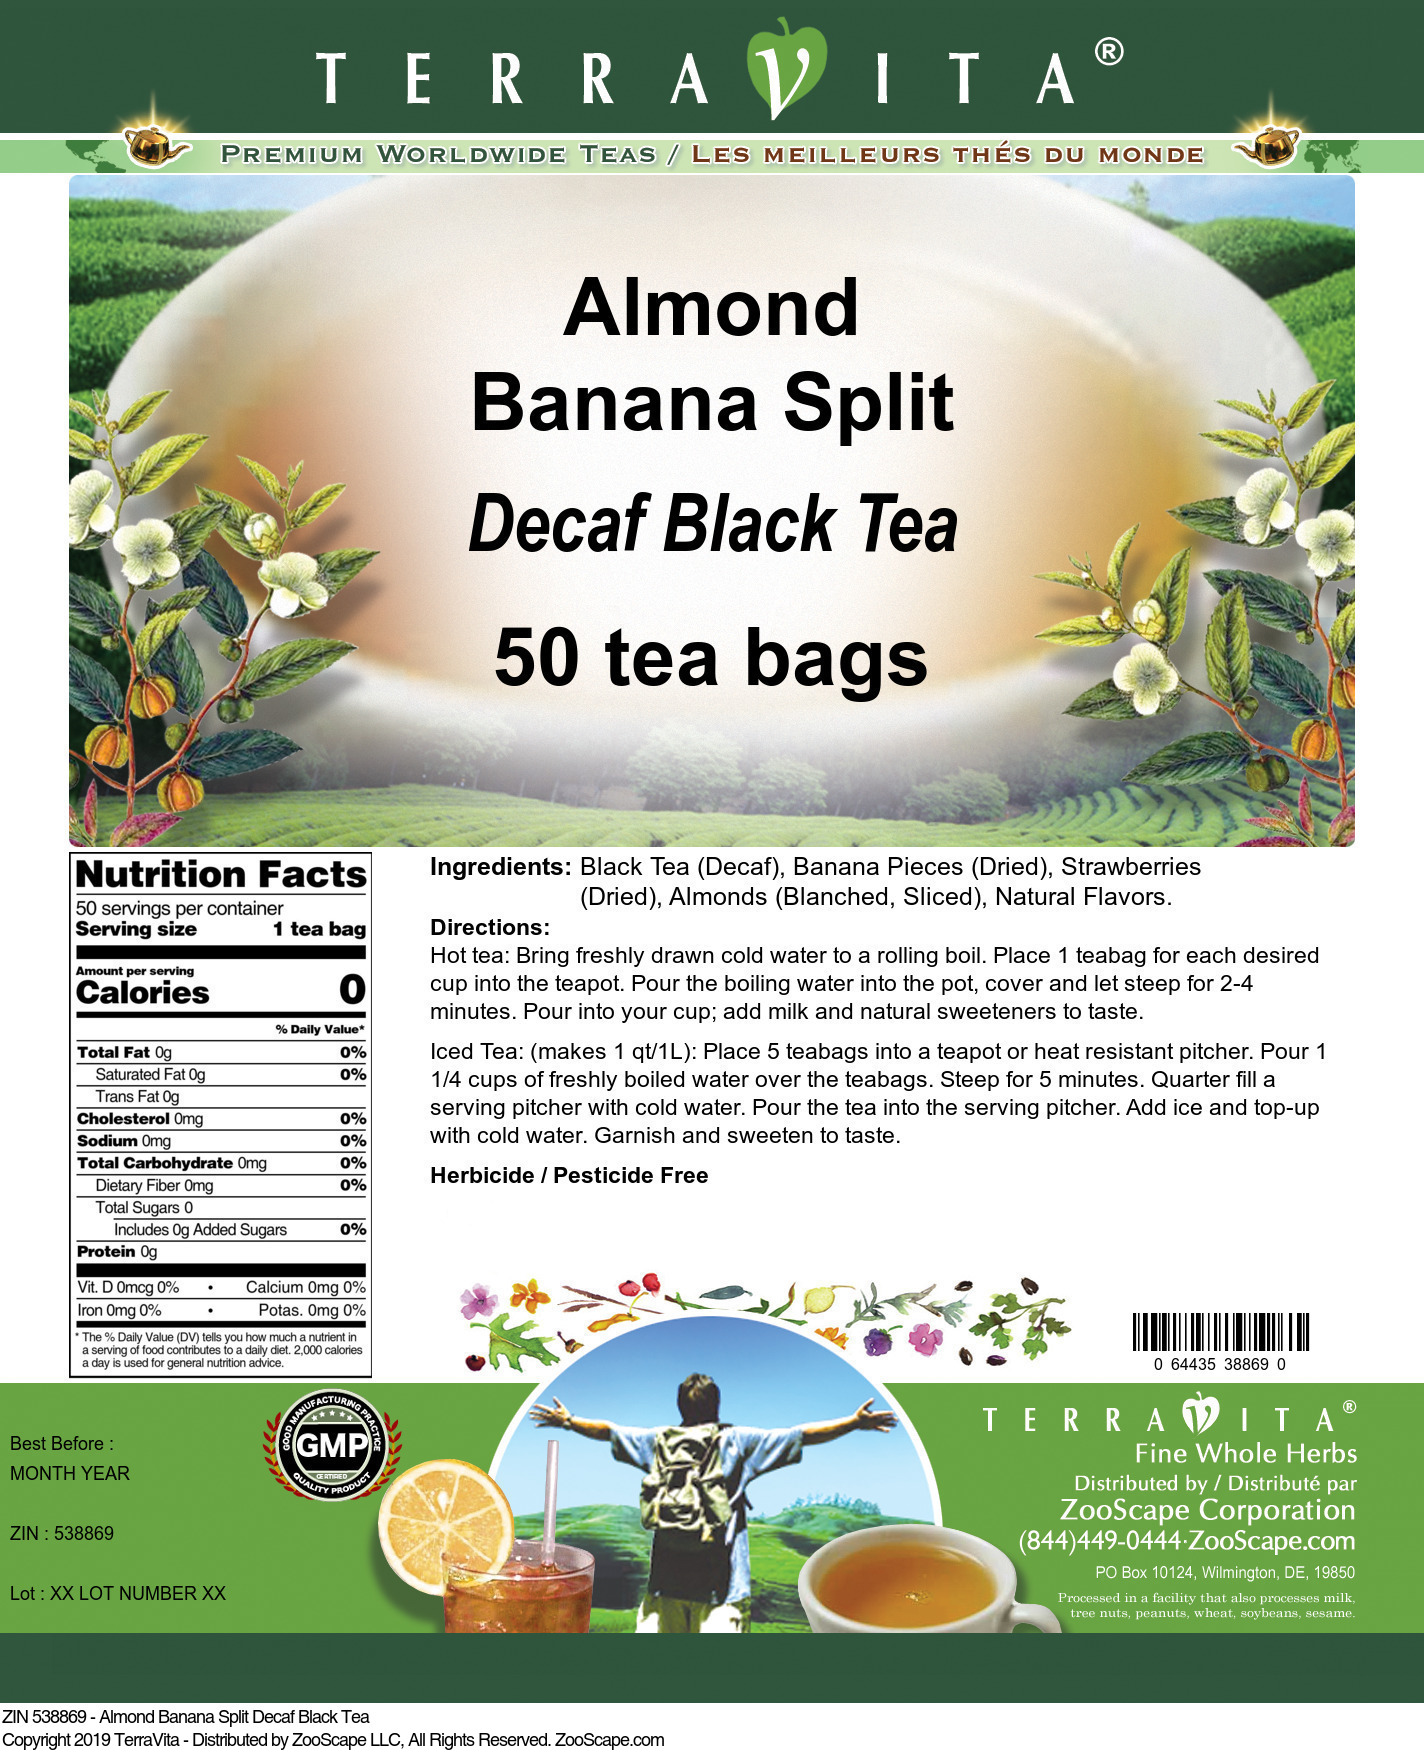 Almond Banana Split Decaf Black Tea - Label